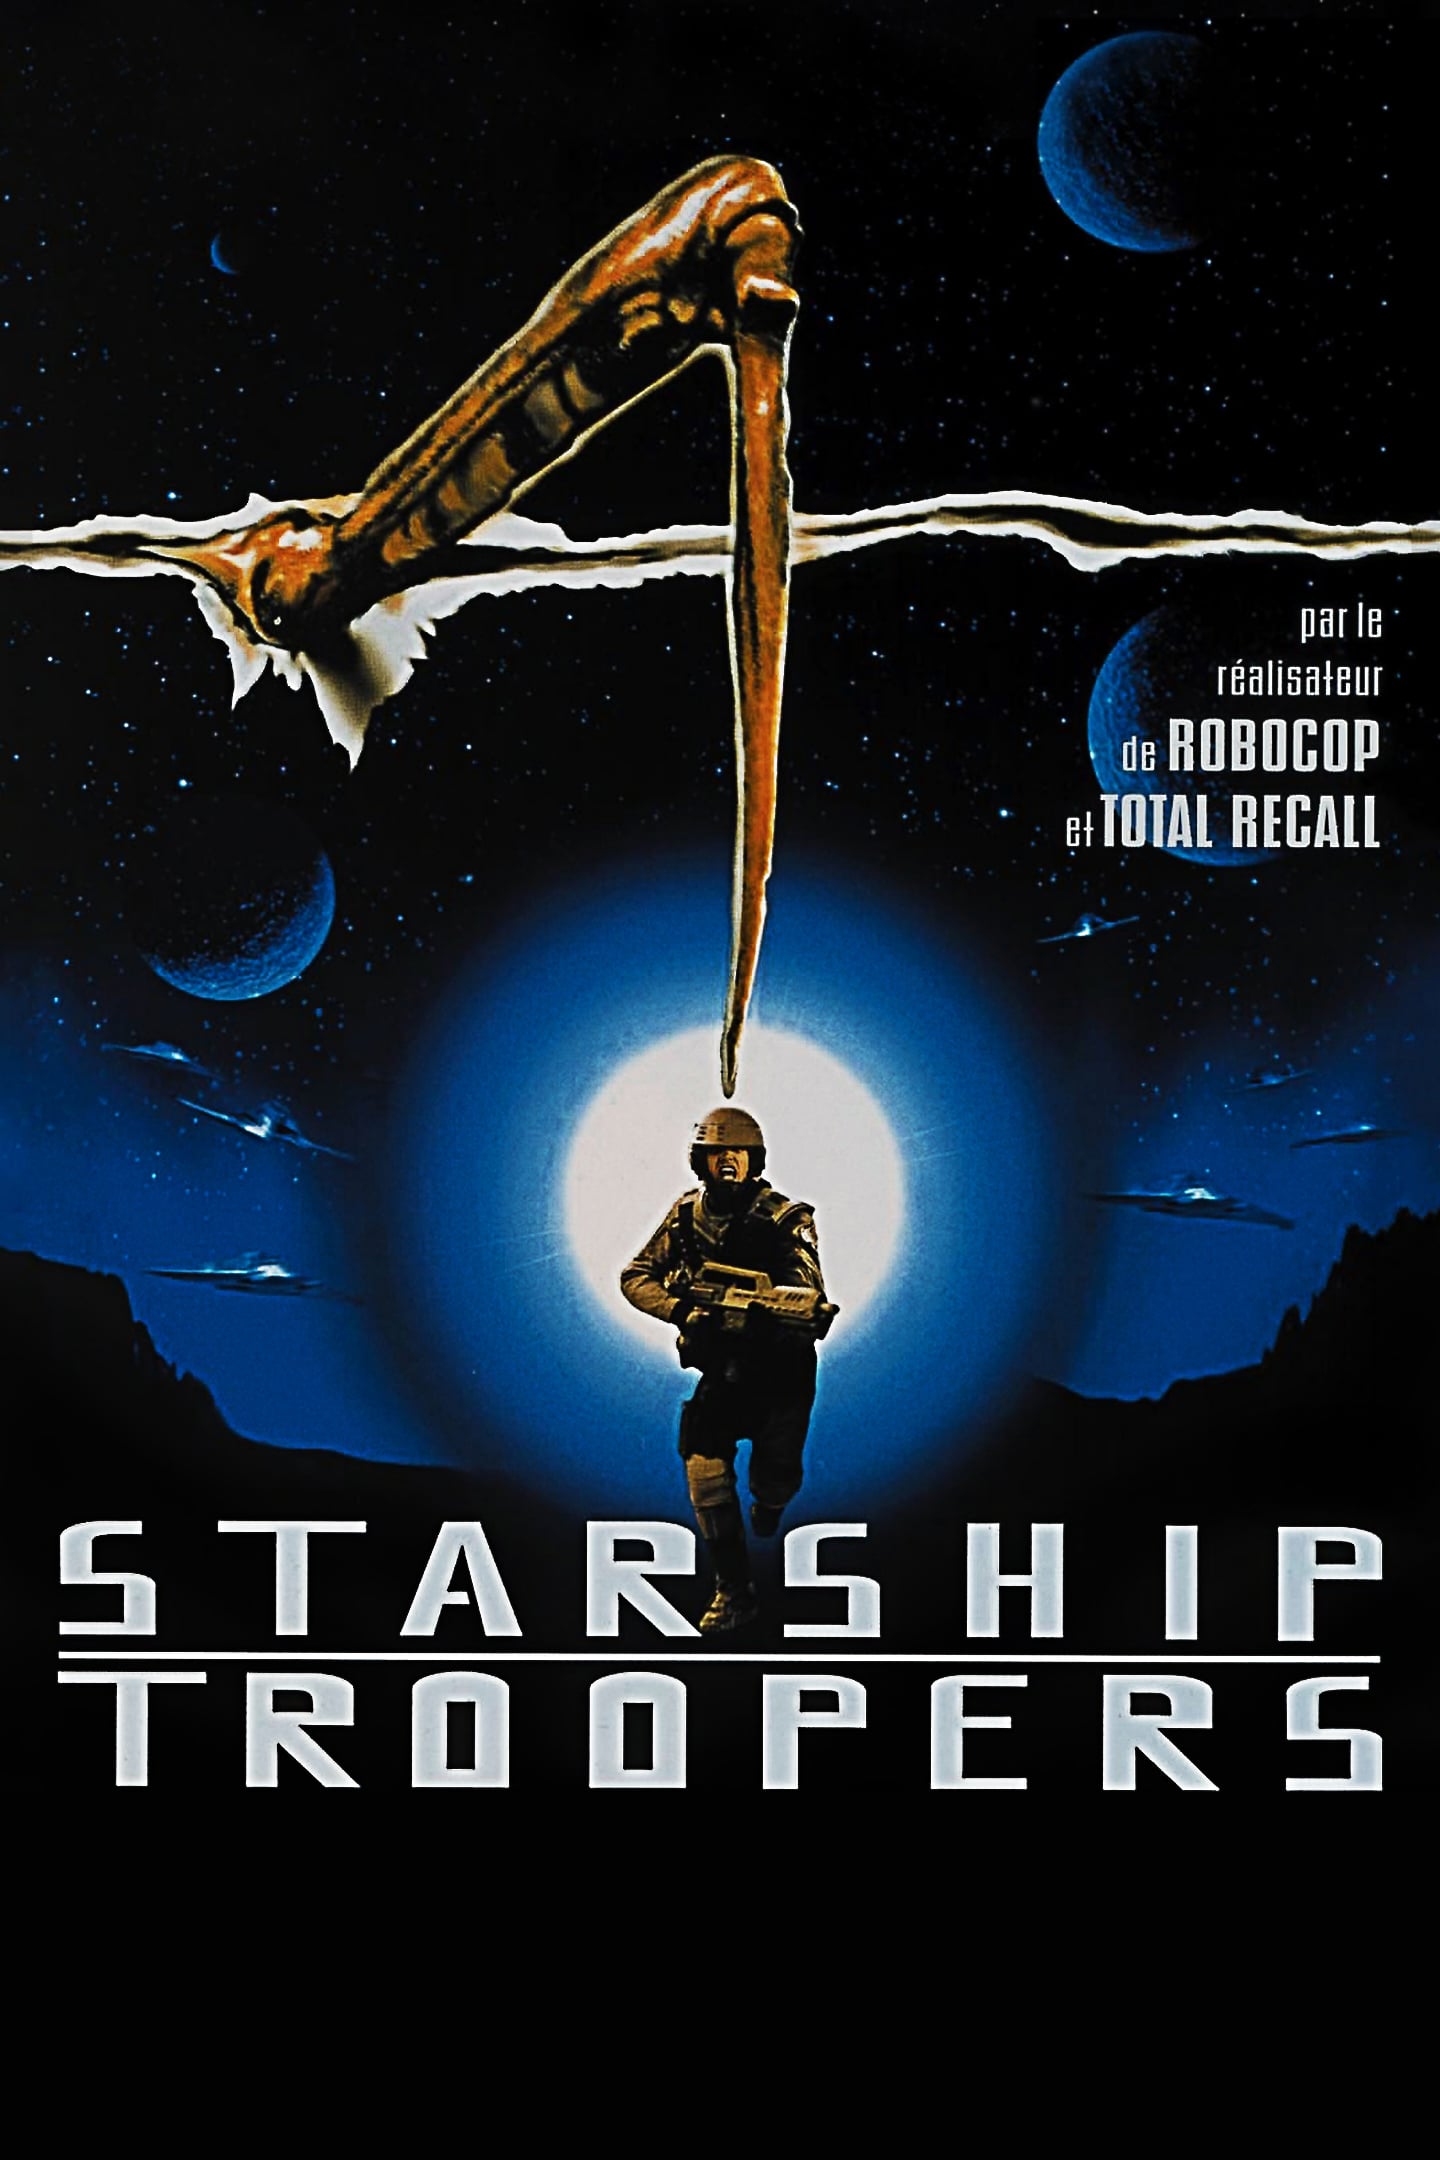 Affiche du film "Starship Troopers"